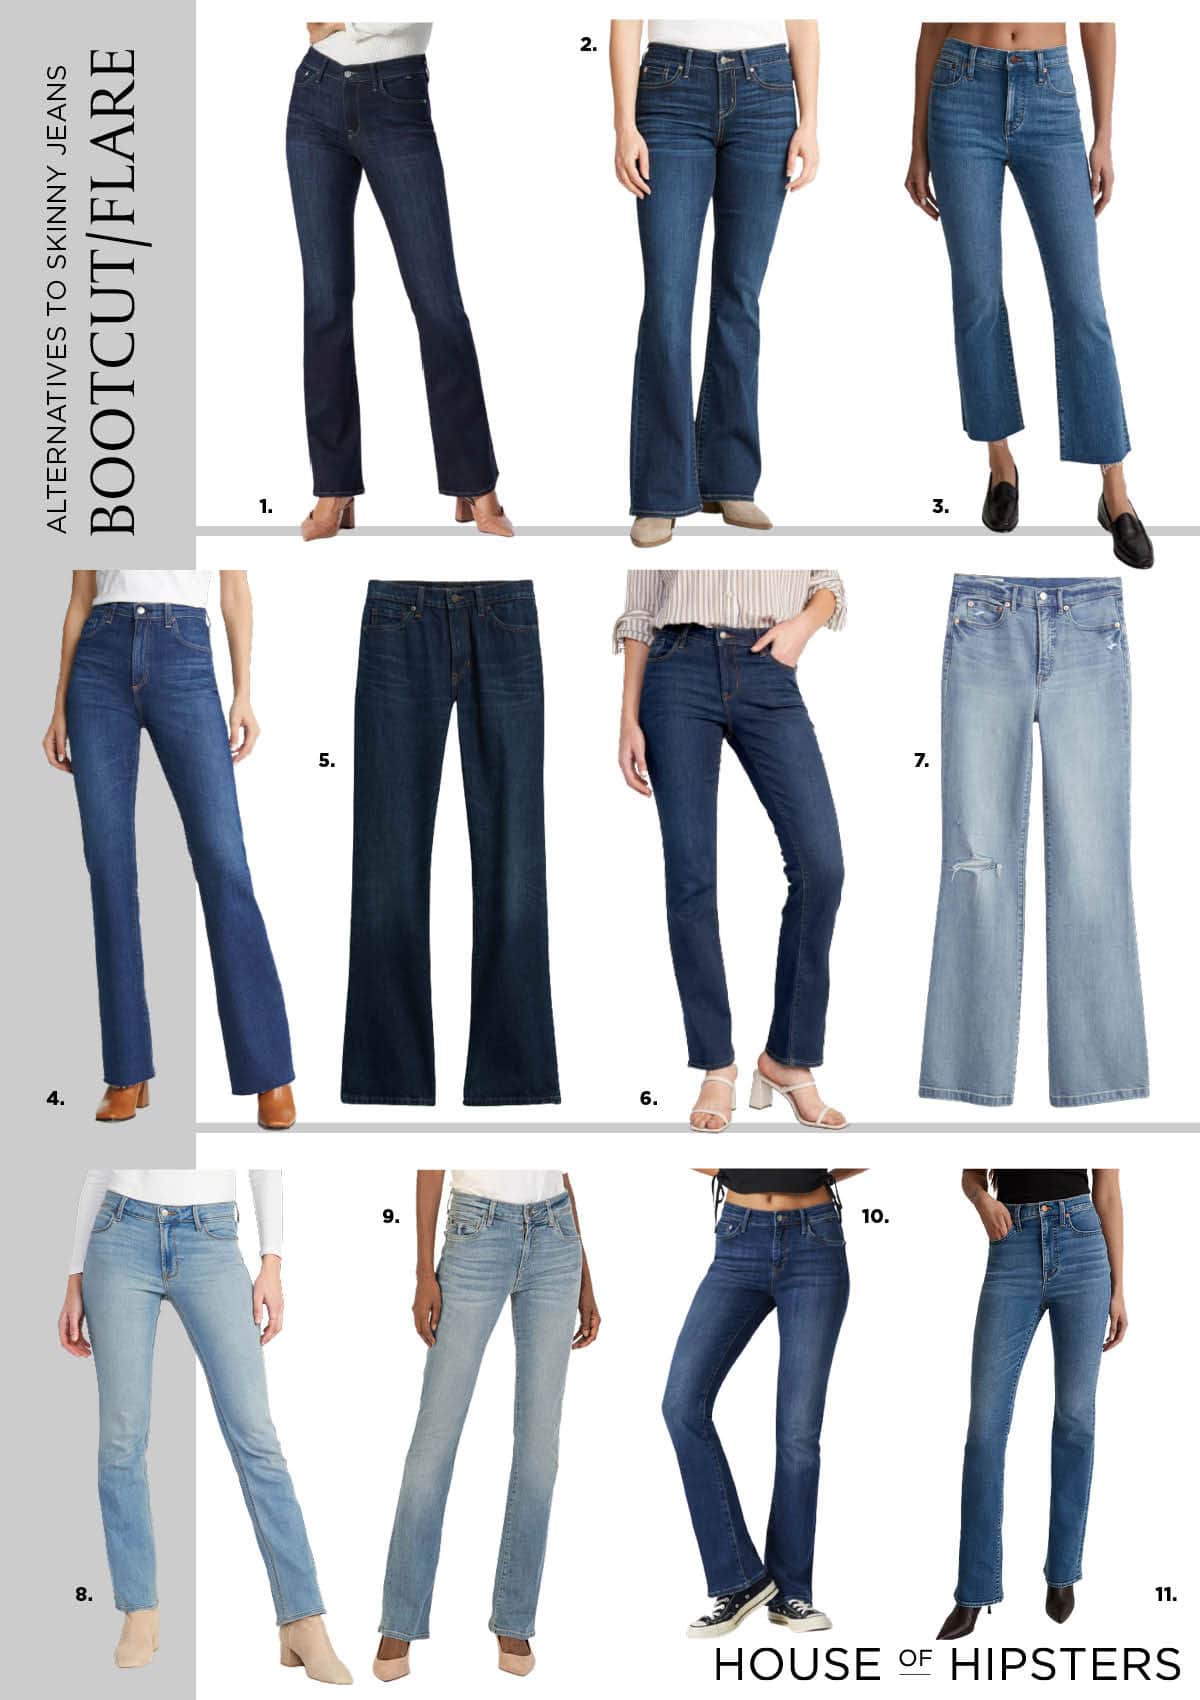 Buy Black Trousers & Pants for Women by Sugathari Online | Ajio.com